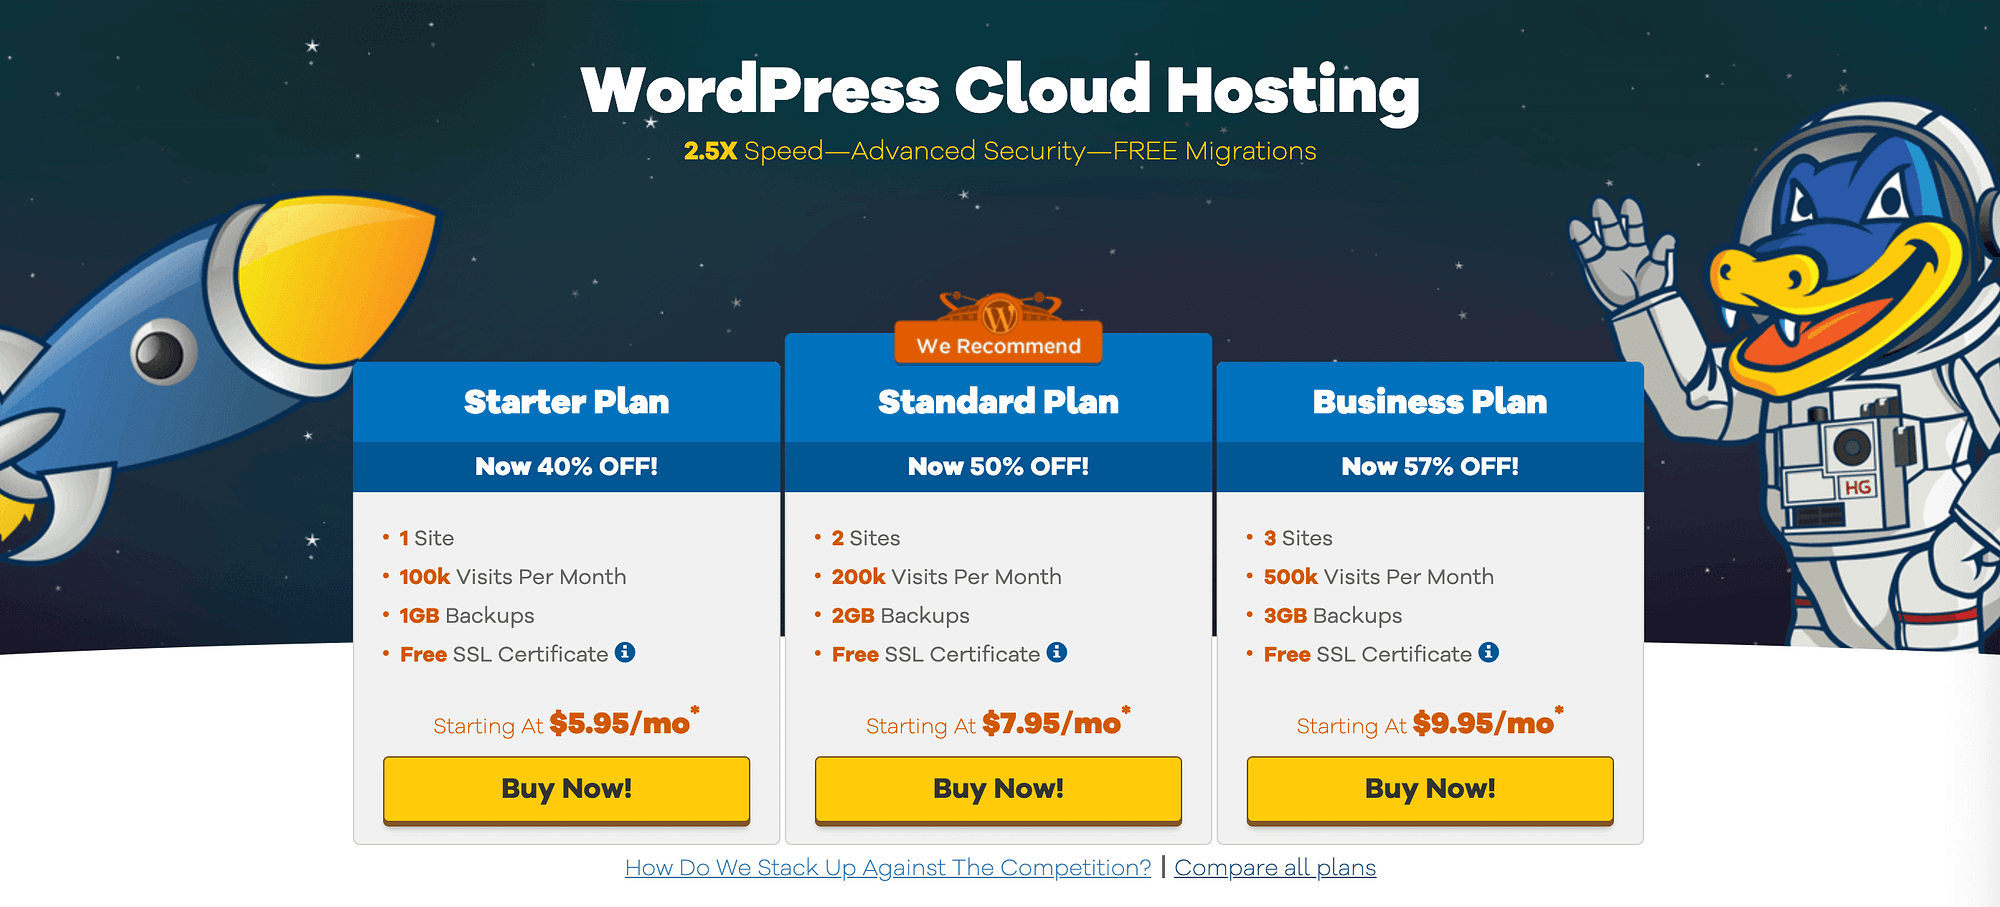 HostGator's WordPress hosting pricing table vs Bluehost